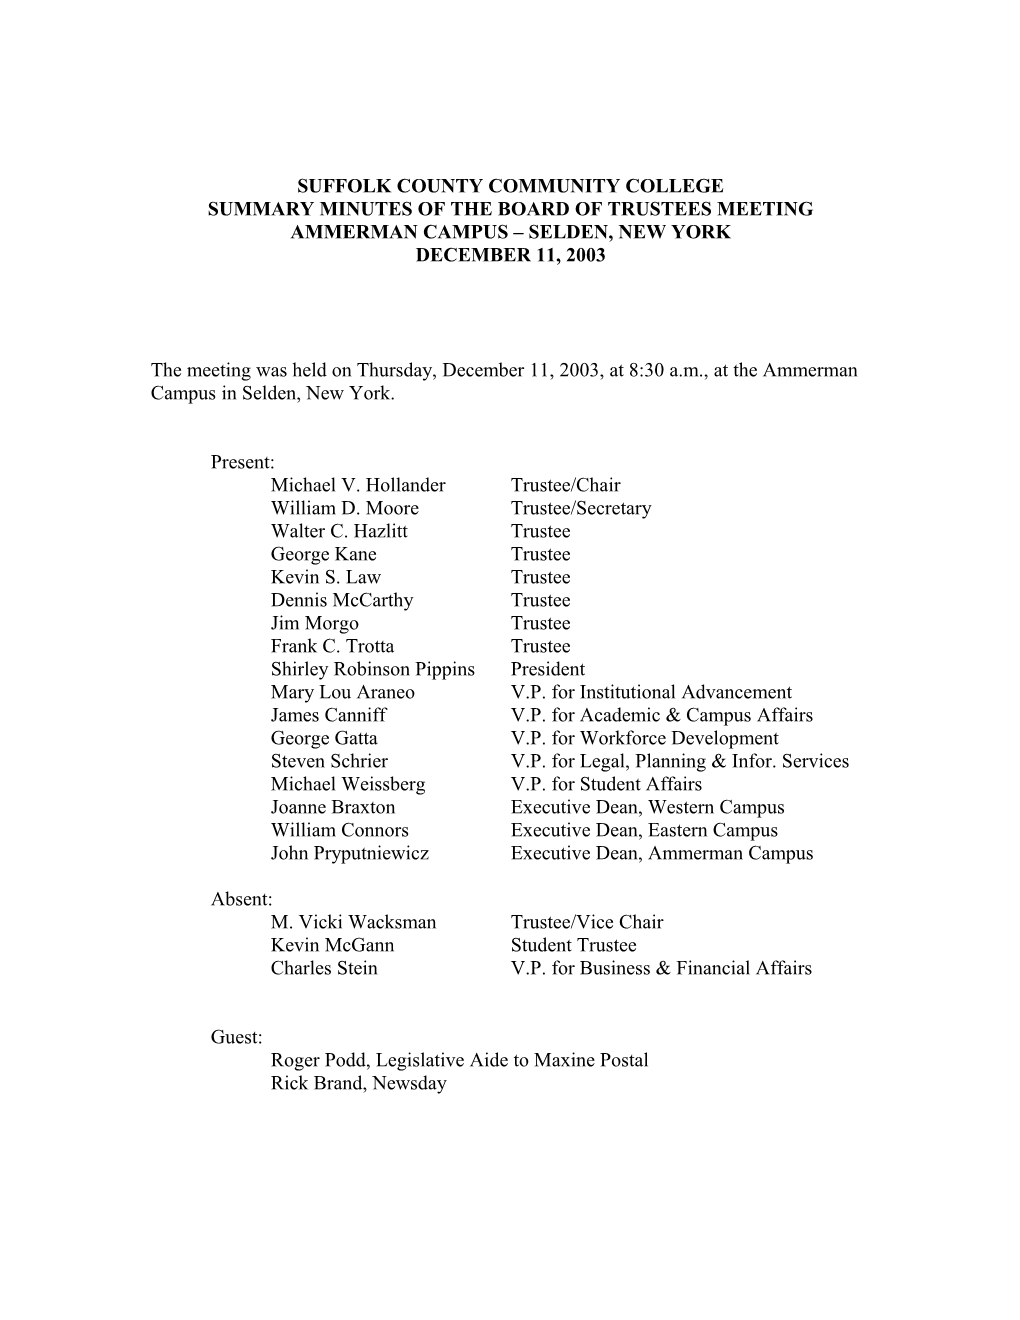 Summary Minutes of the Board of Trusteesmeeting